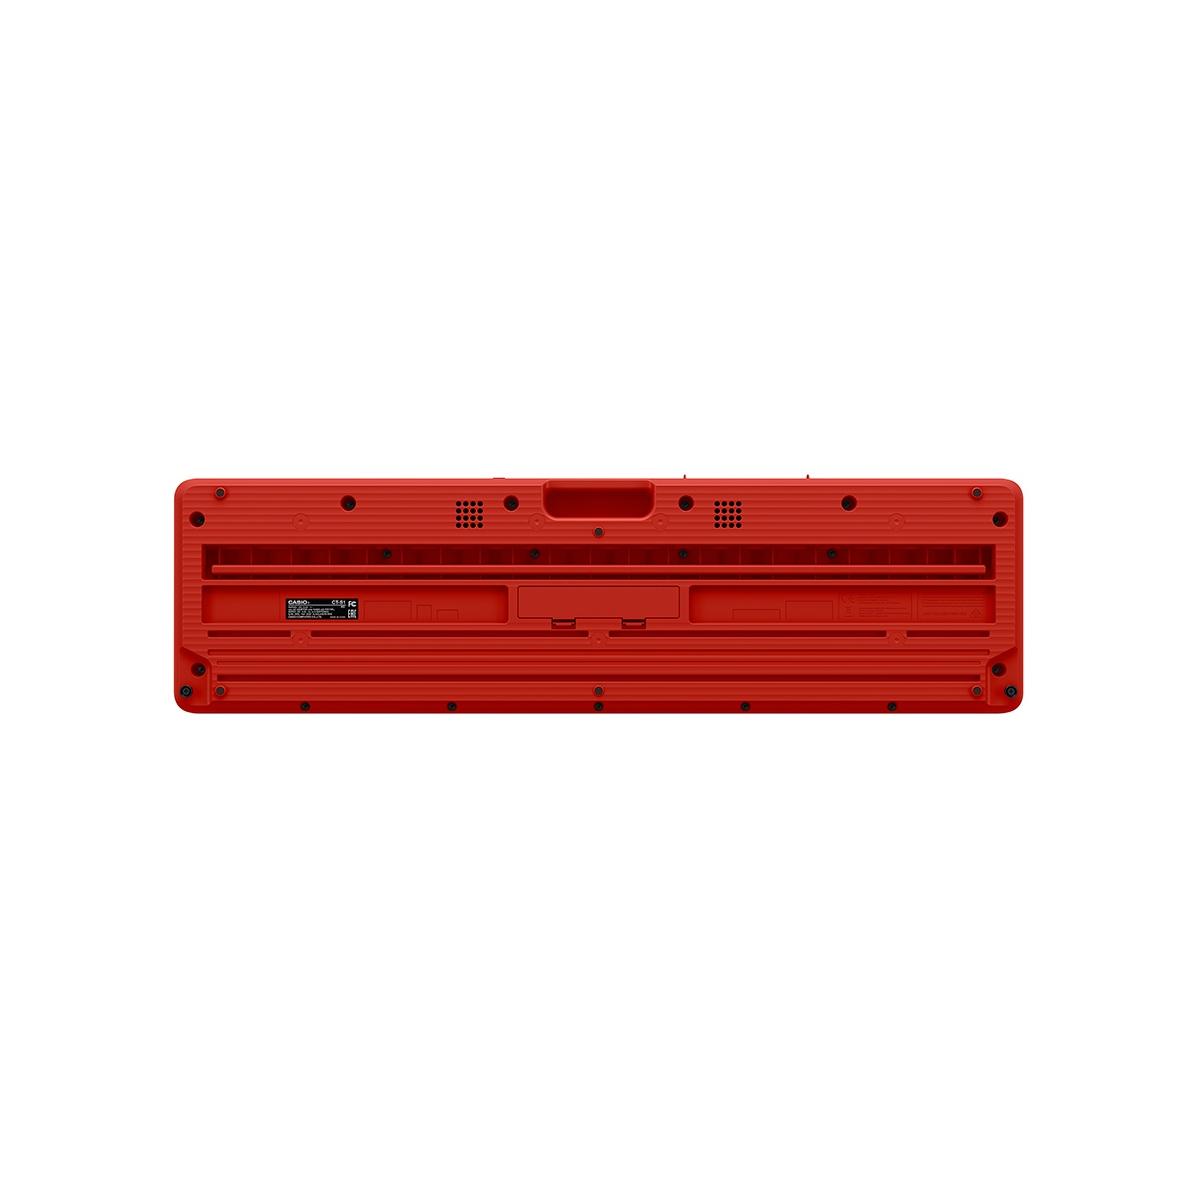 Casio ct-s1rd red tastiera dinamica 61 tasti